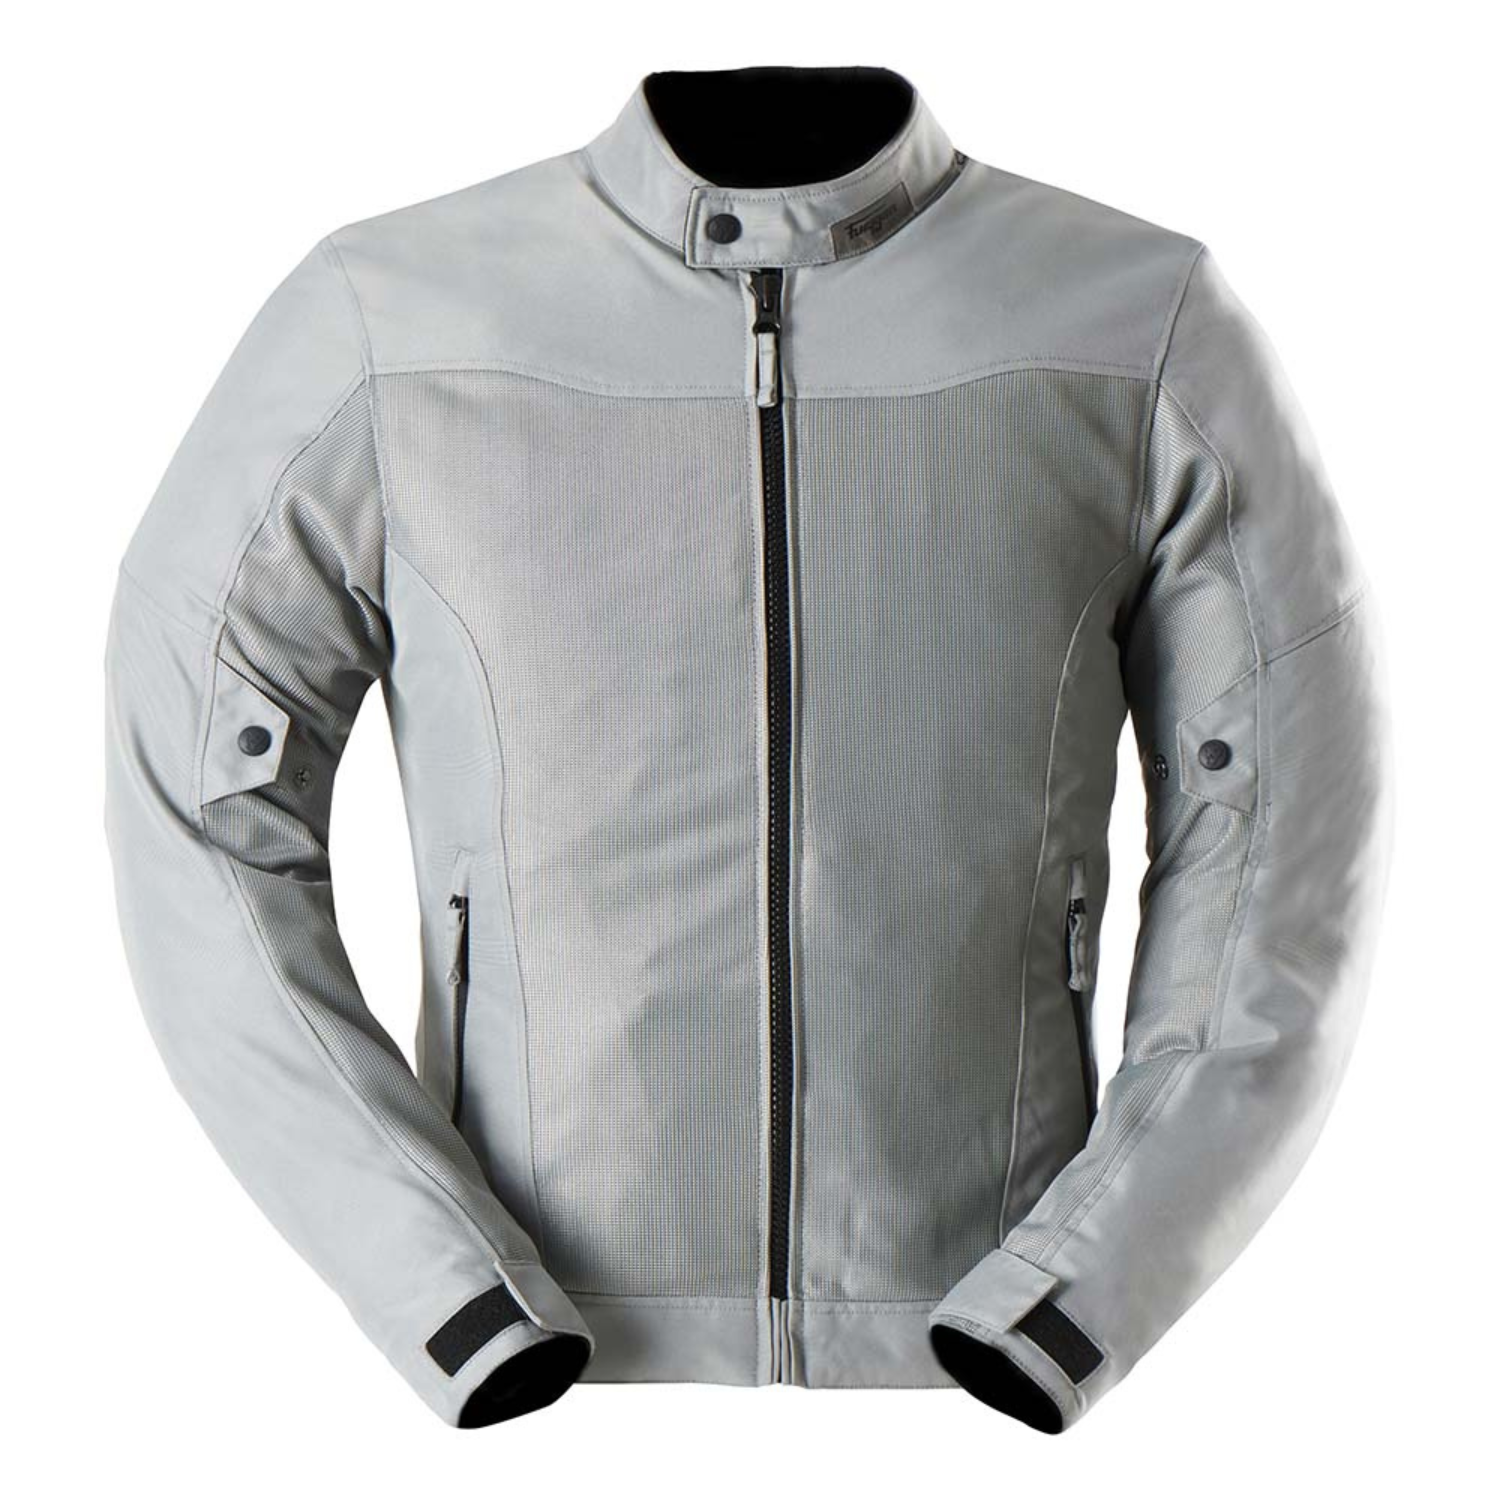 Image of Furygan Mistral Evo 3 Jacket Grey Size M ID 3435980362669